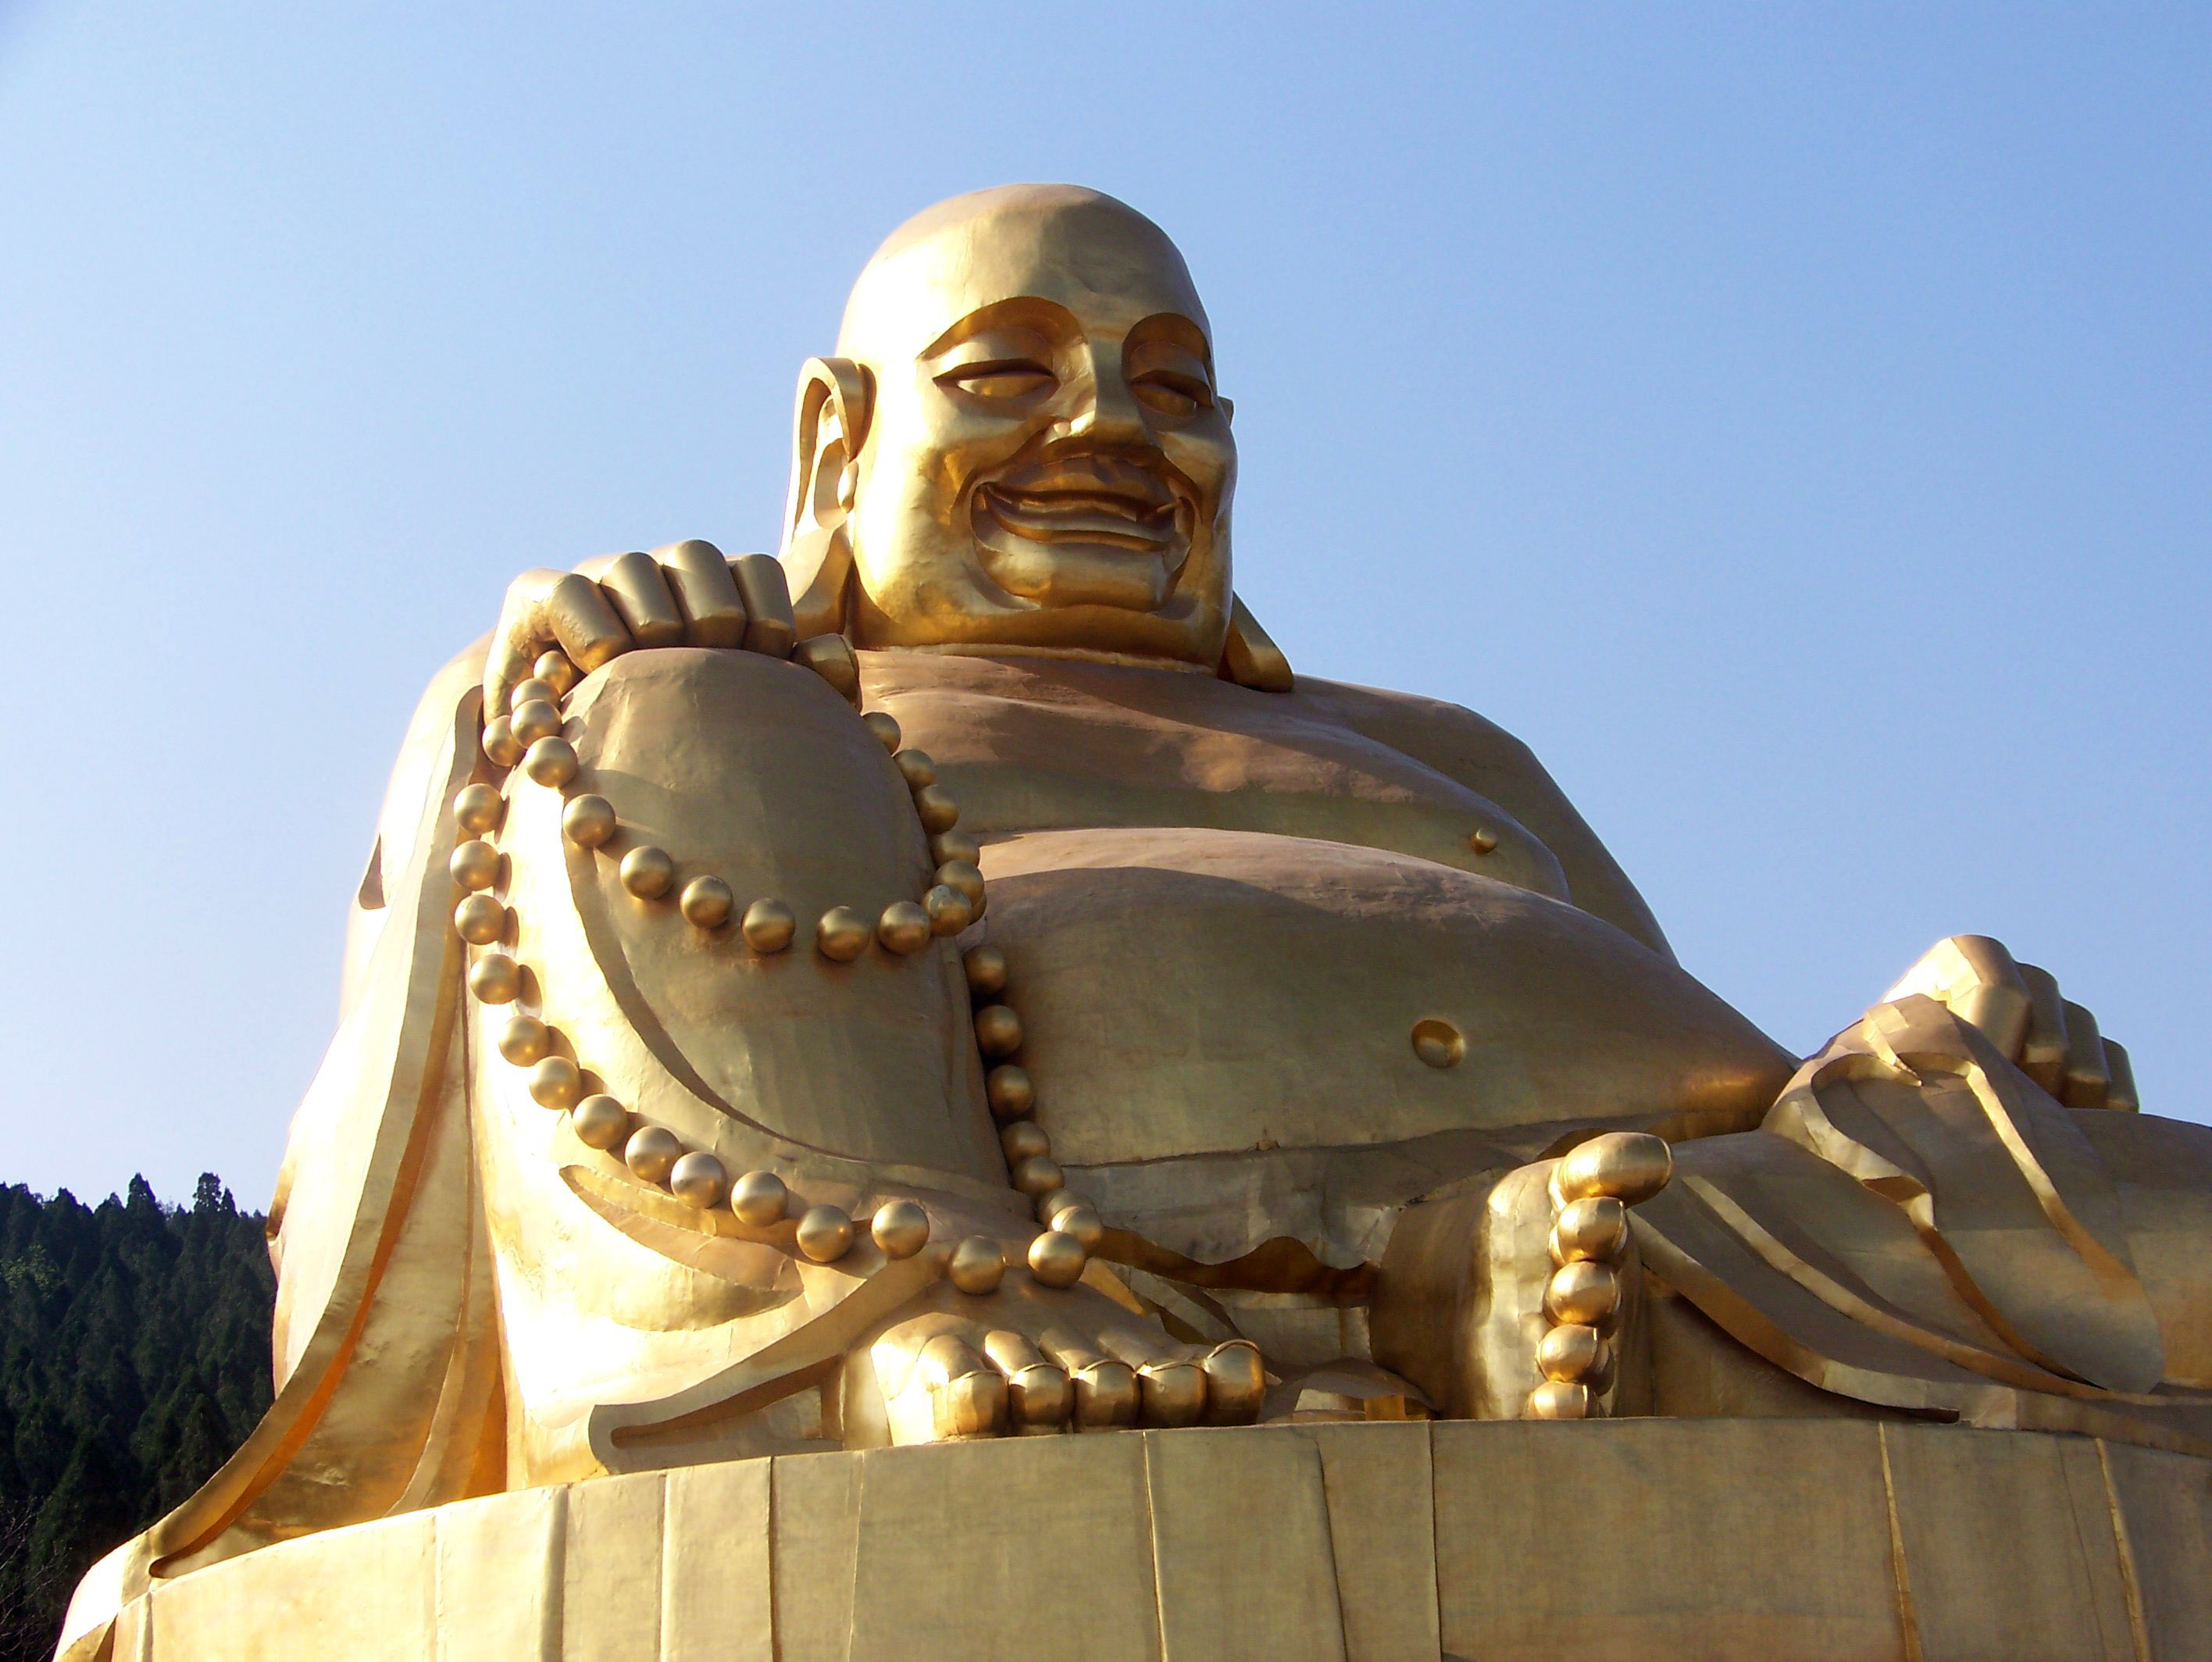 Large Golden Buddha Statue in Jinan, China image - Free stock photo ...